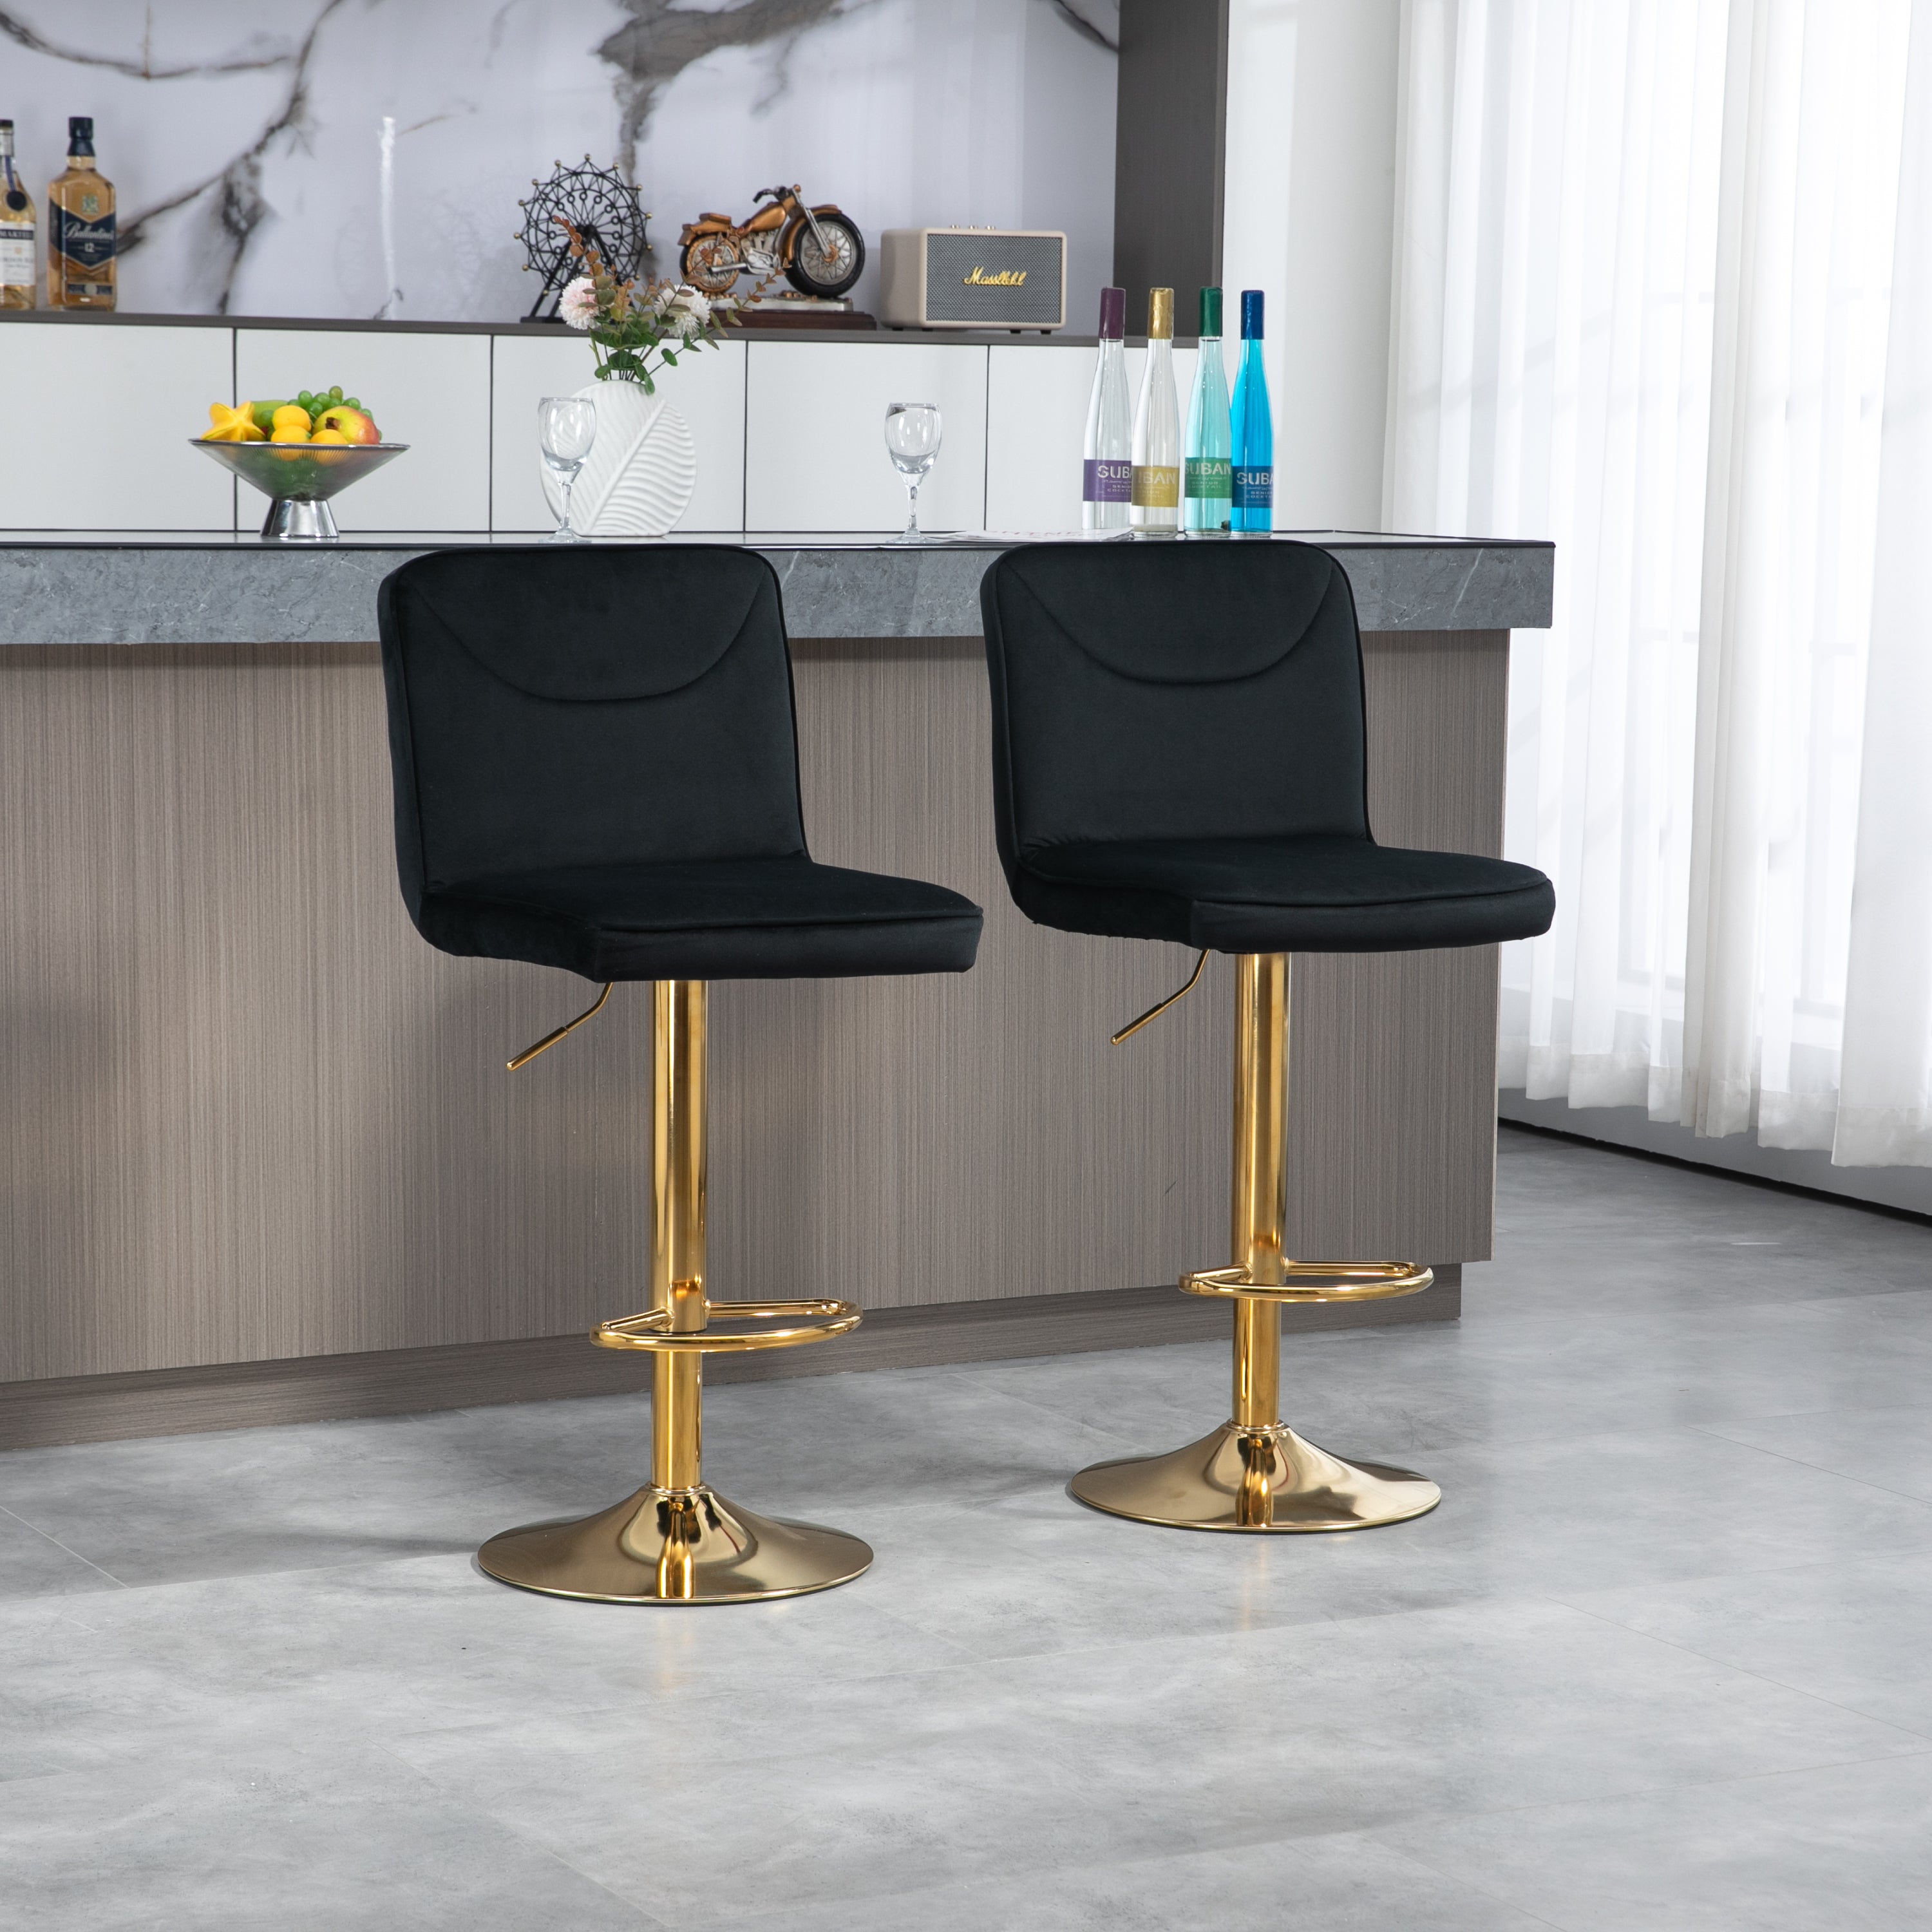 🆓🚛 Modern Swivel Bar stools Set of 2, Adjustable Counter Height Bar Chairs, with Backrest Footrest, Golden Base, Black